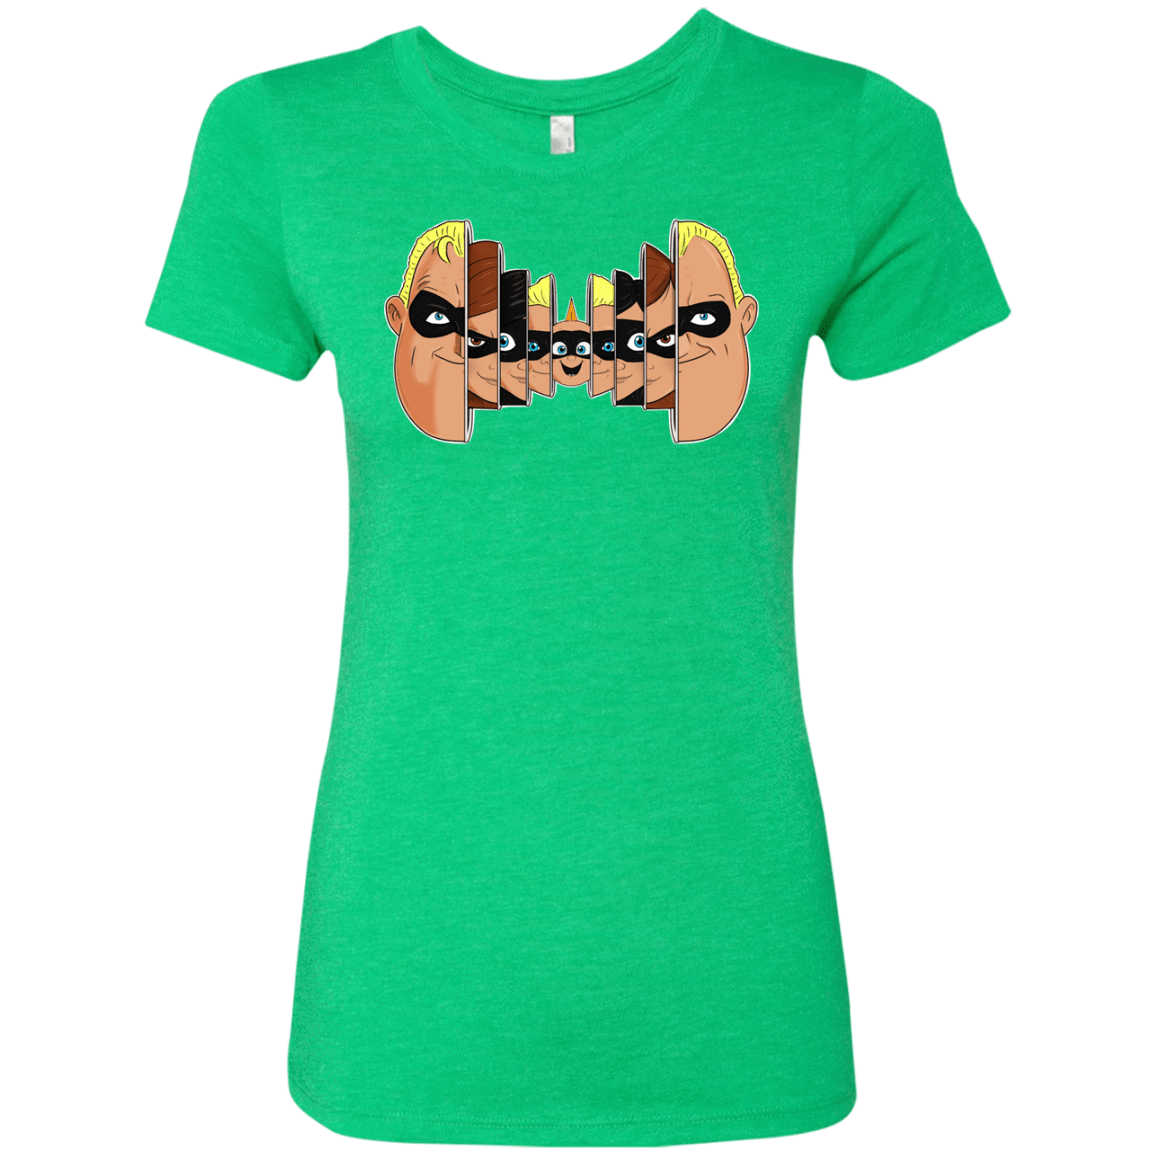 T-Shirts Envy / S Incredibles Women's Triblend T-Shirt